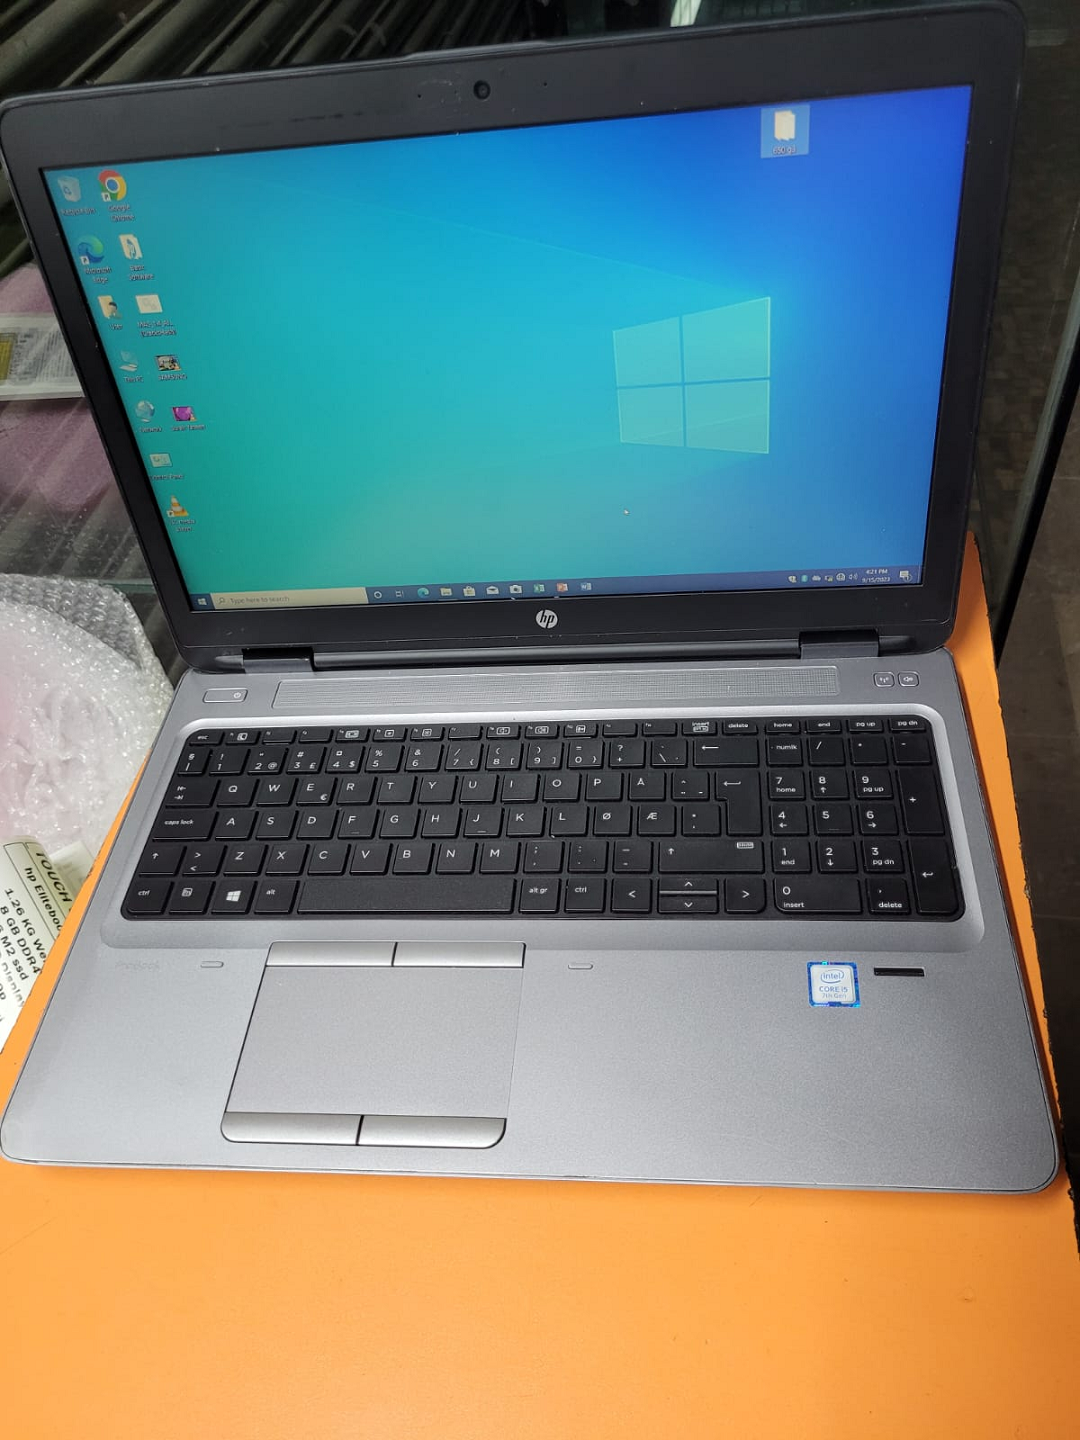 ProBook 650 G3 core i5 7th generation laptop price in pakistan